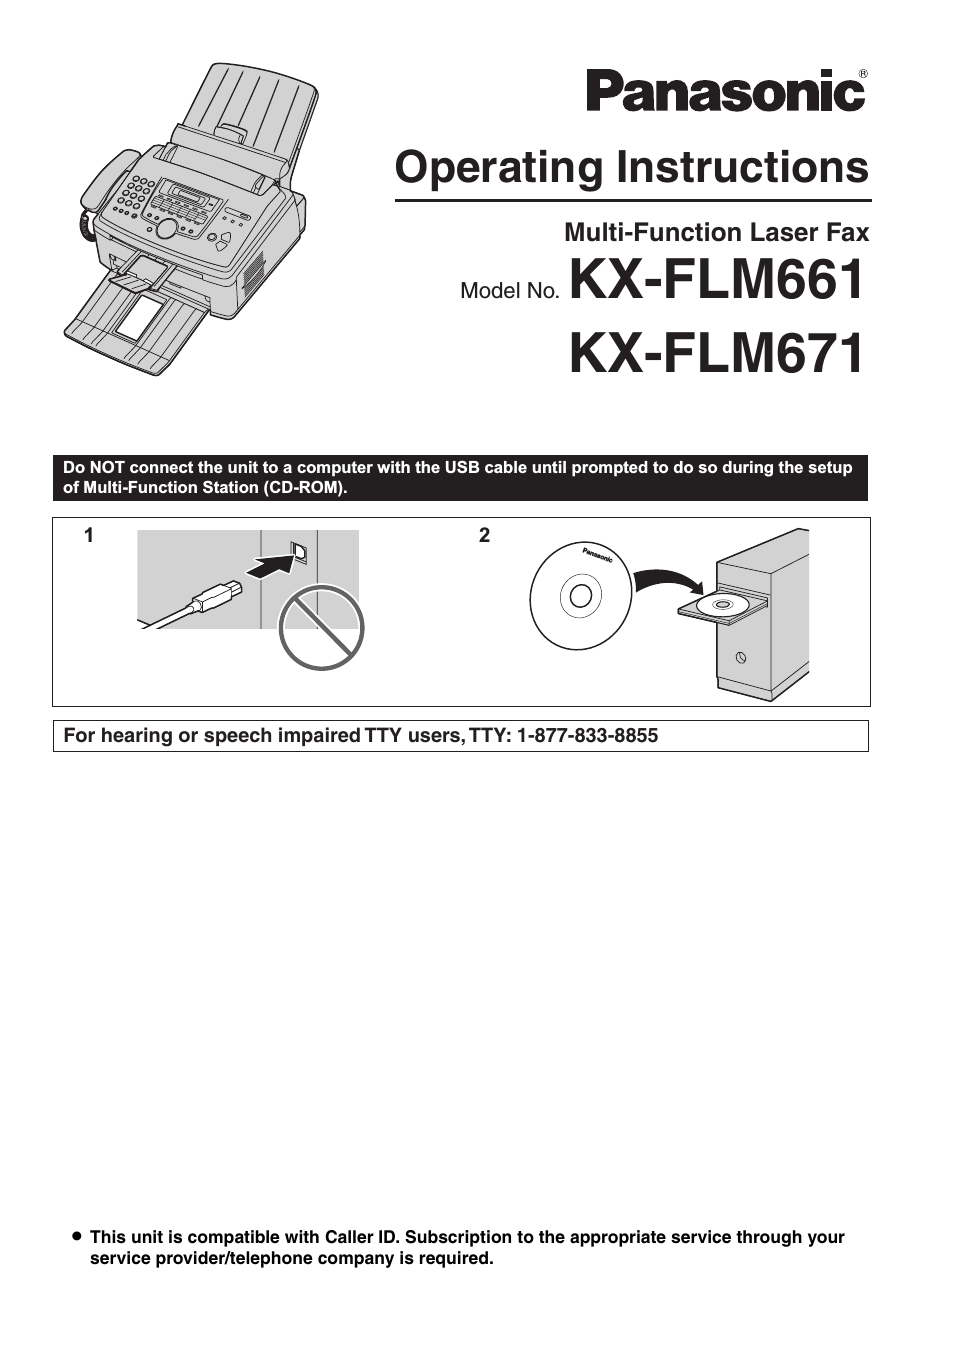 KX-FLM661